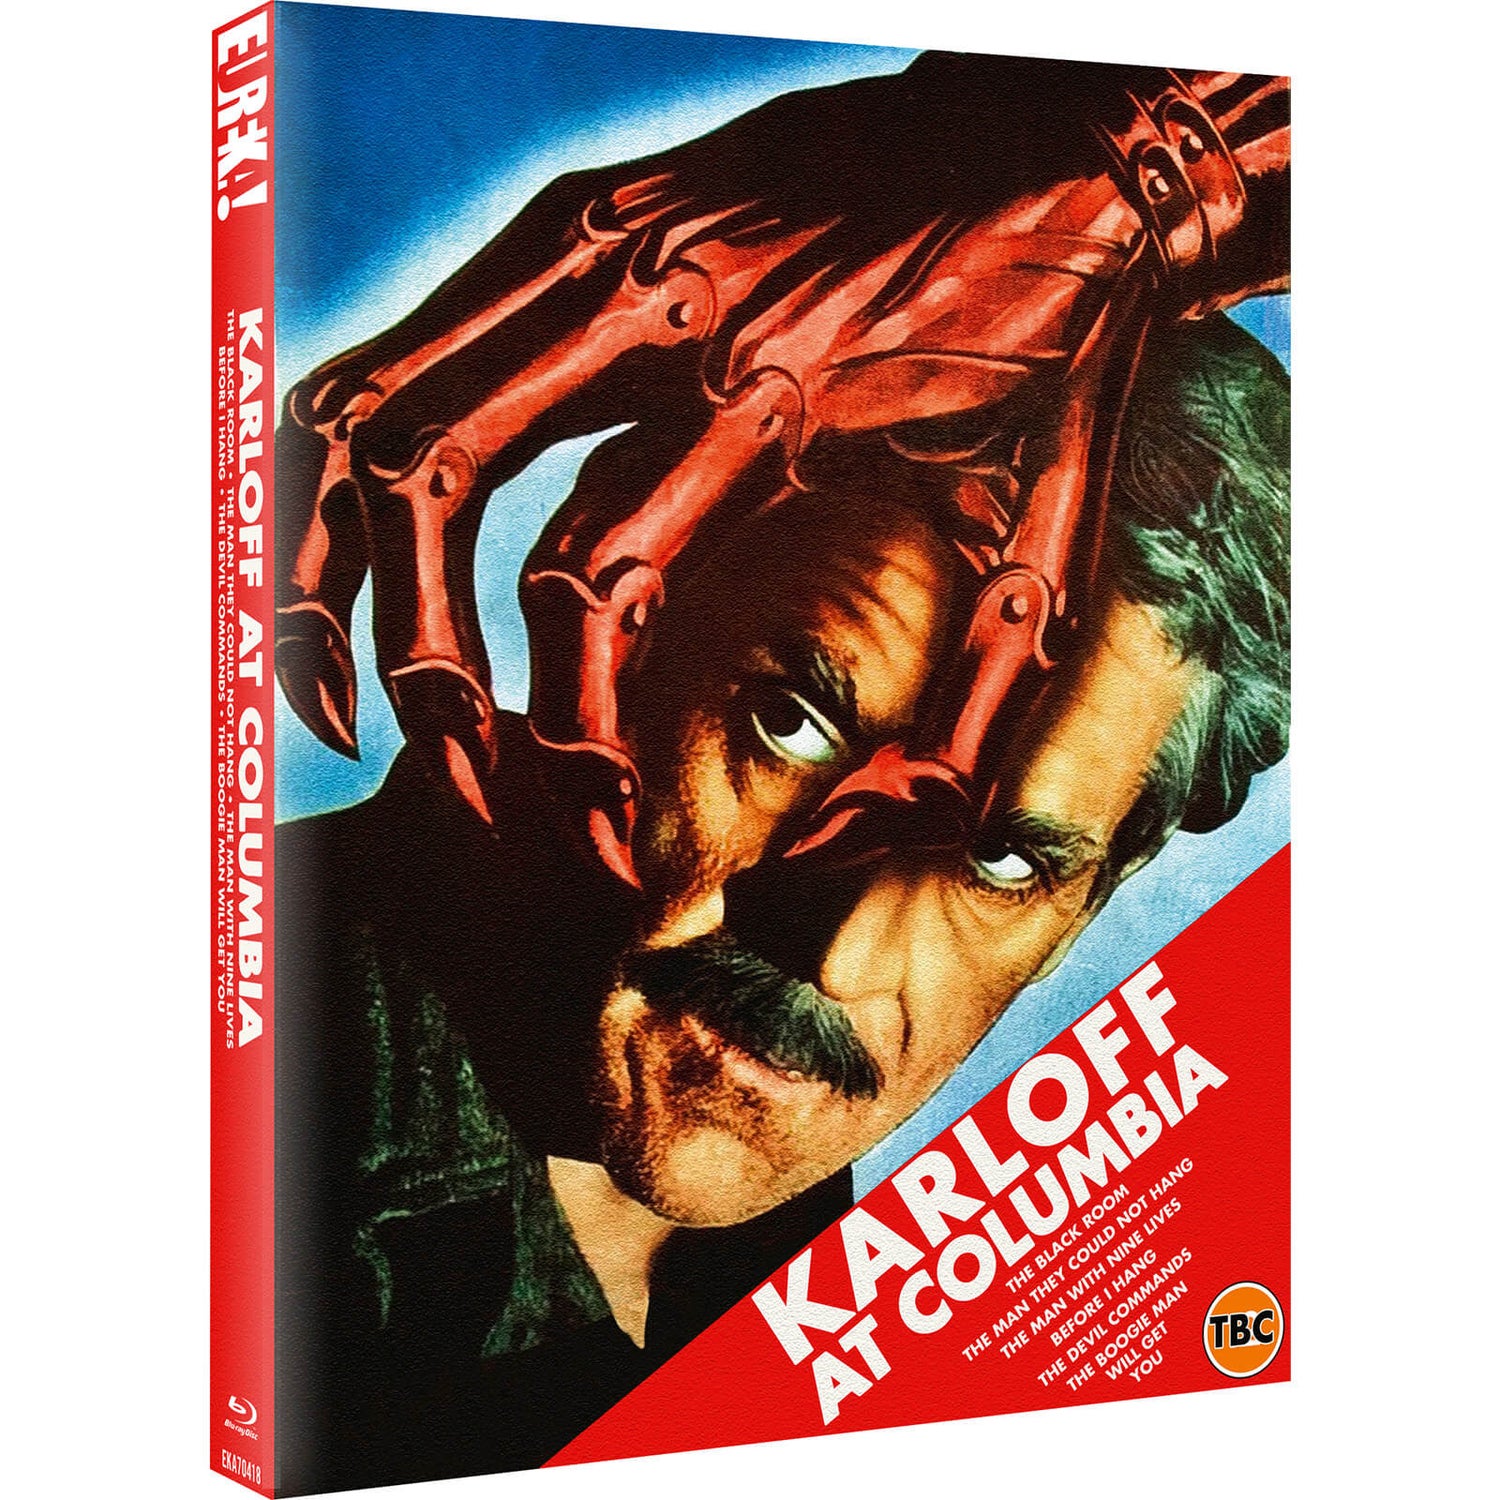 Karloff at Columbia (Eureka Classics) Limited Edition